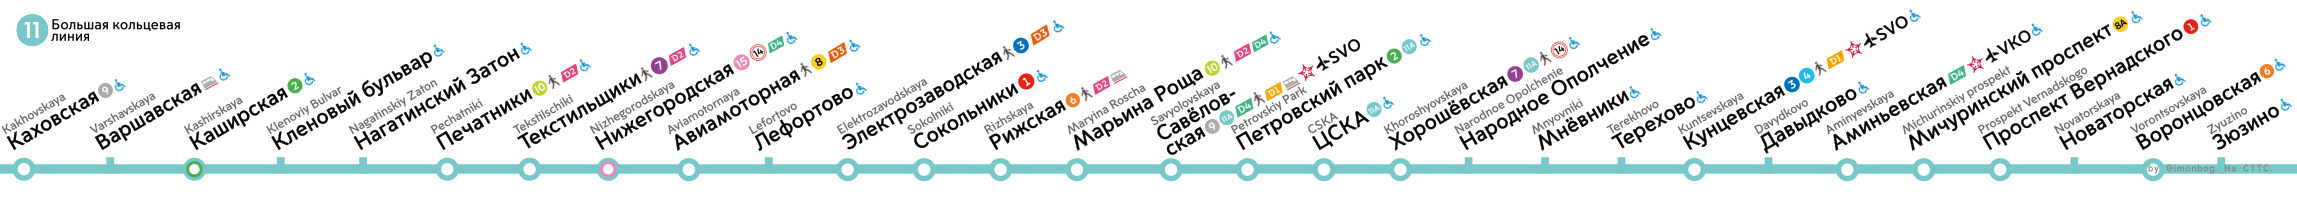 Moszkva — Metropolitain — [11] Bol'shaya Koltsevaya Line